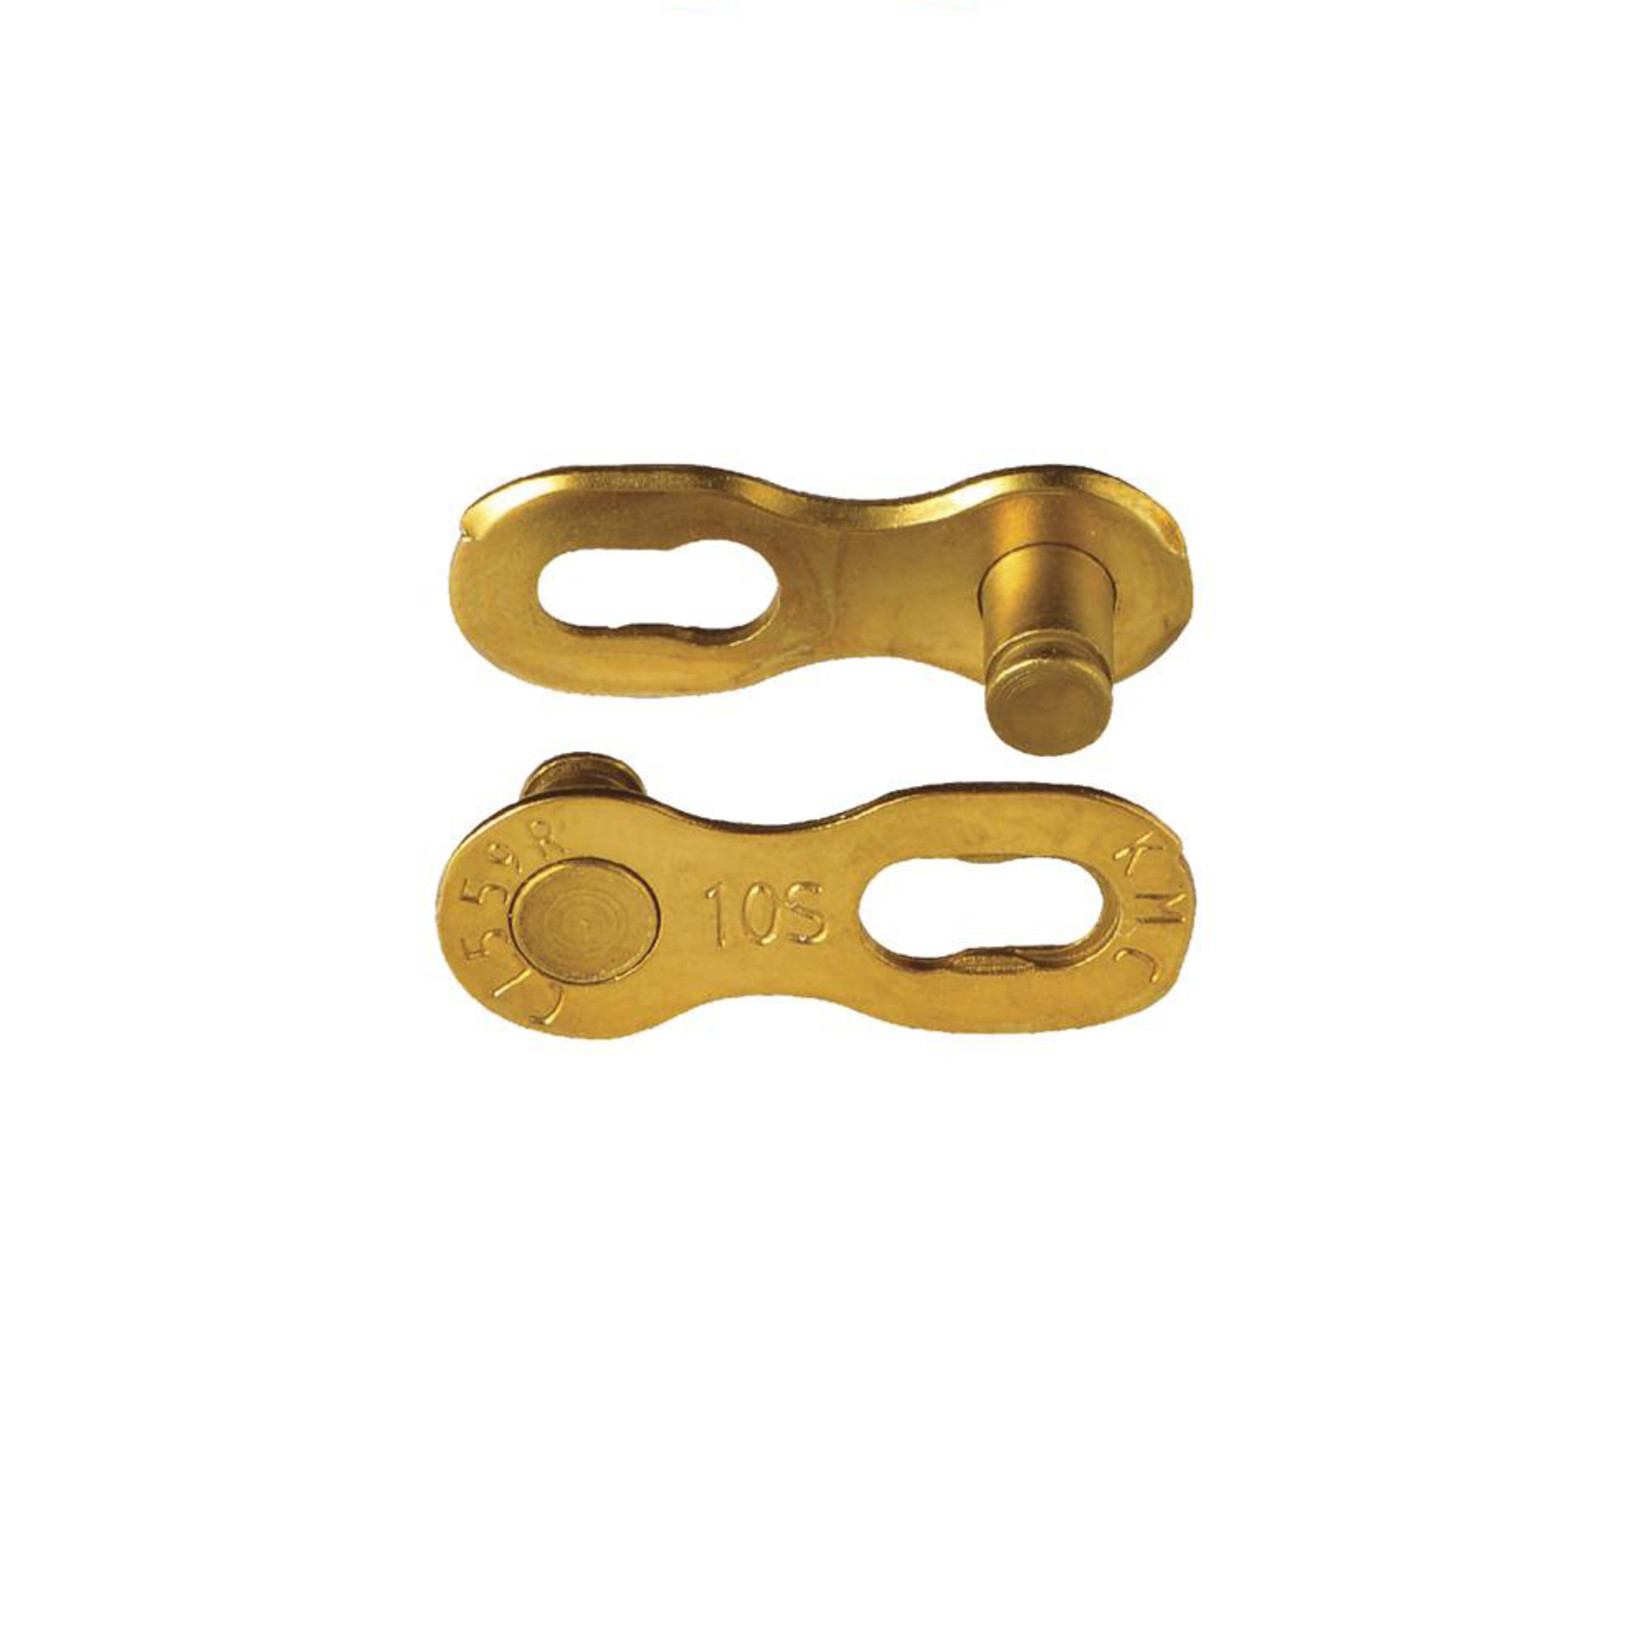 KMC KMC Bike Chain - Connecting Link - 10 Speed - Titanium Nitride Gold